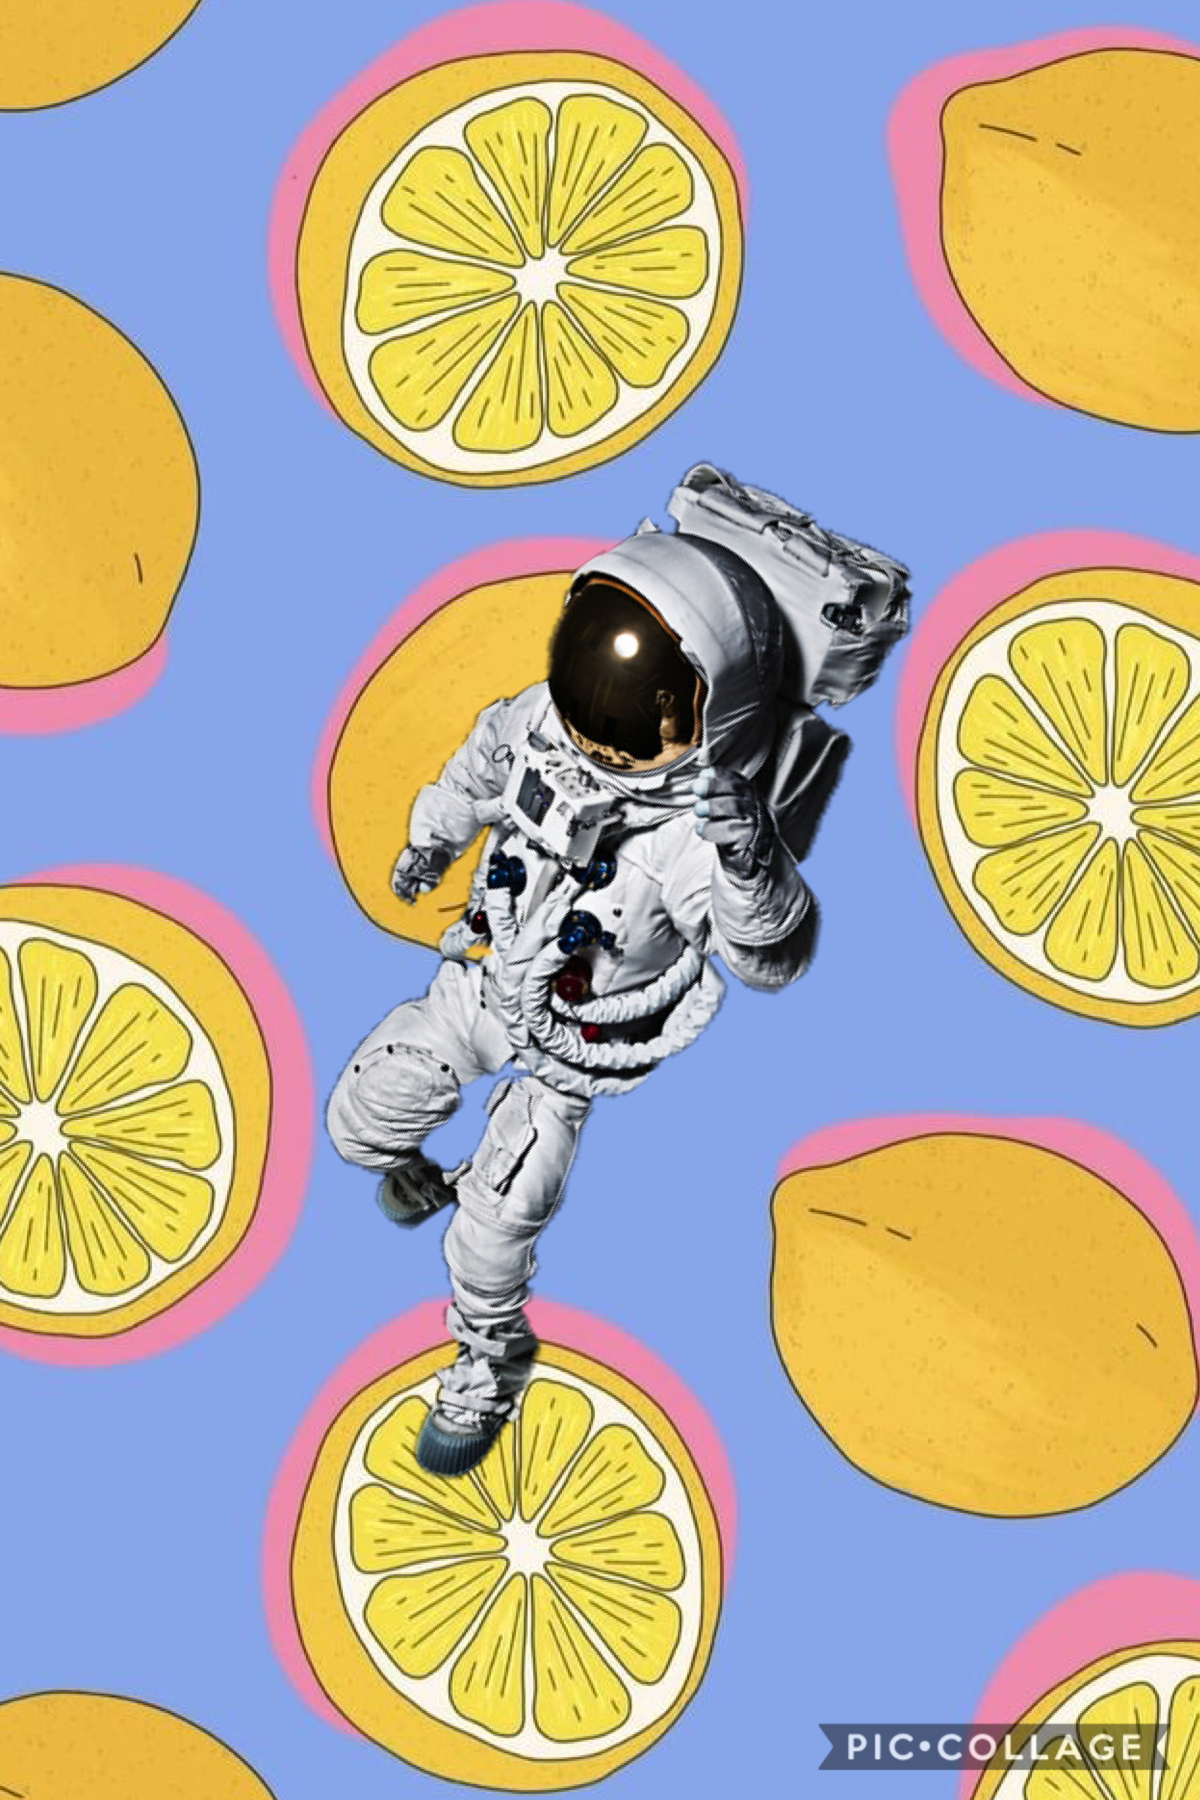 When life gives you lemons, make an astronaut 